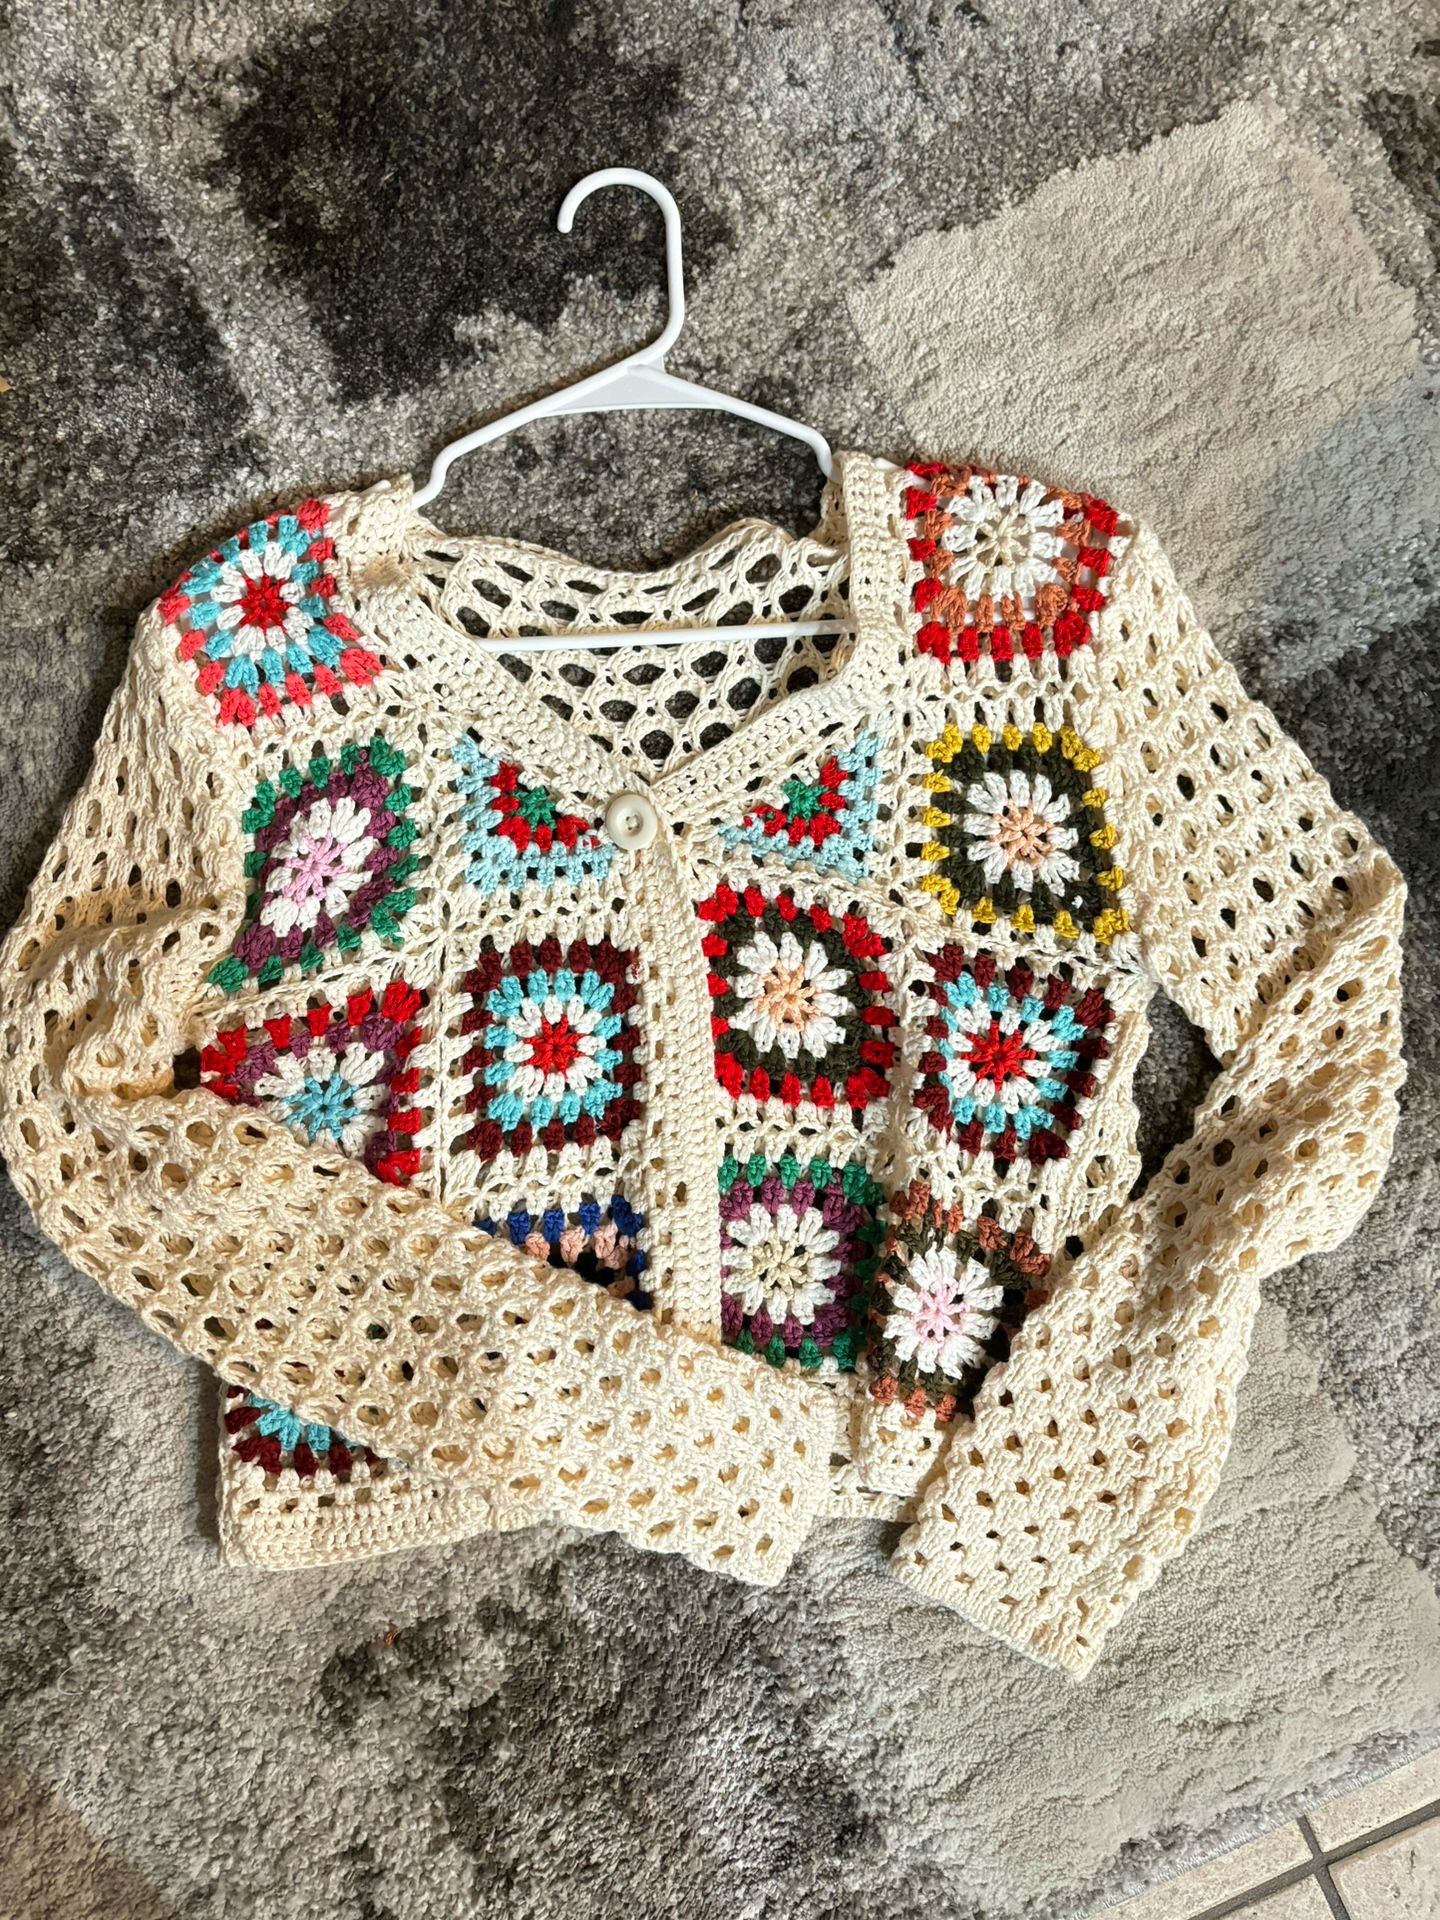 Knit Cardigan 